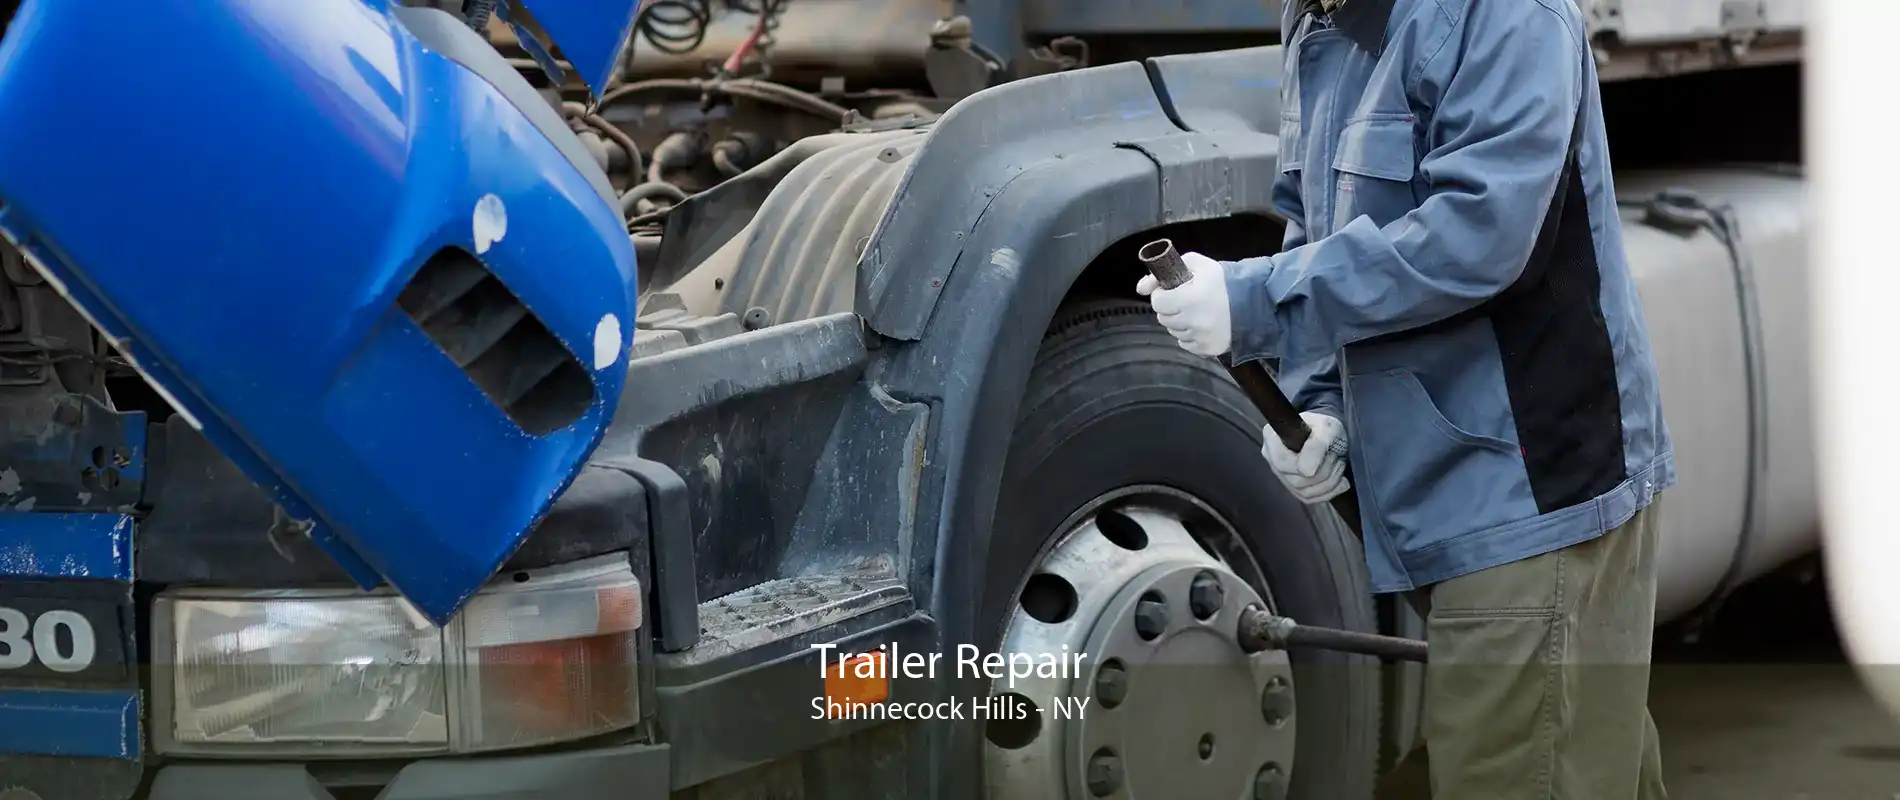 Trailer Repair Shinnecock Hills - NY